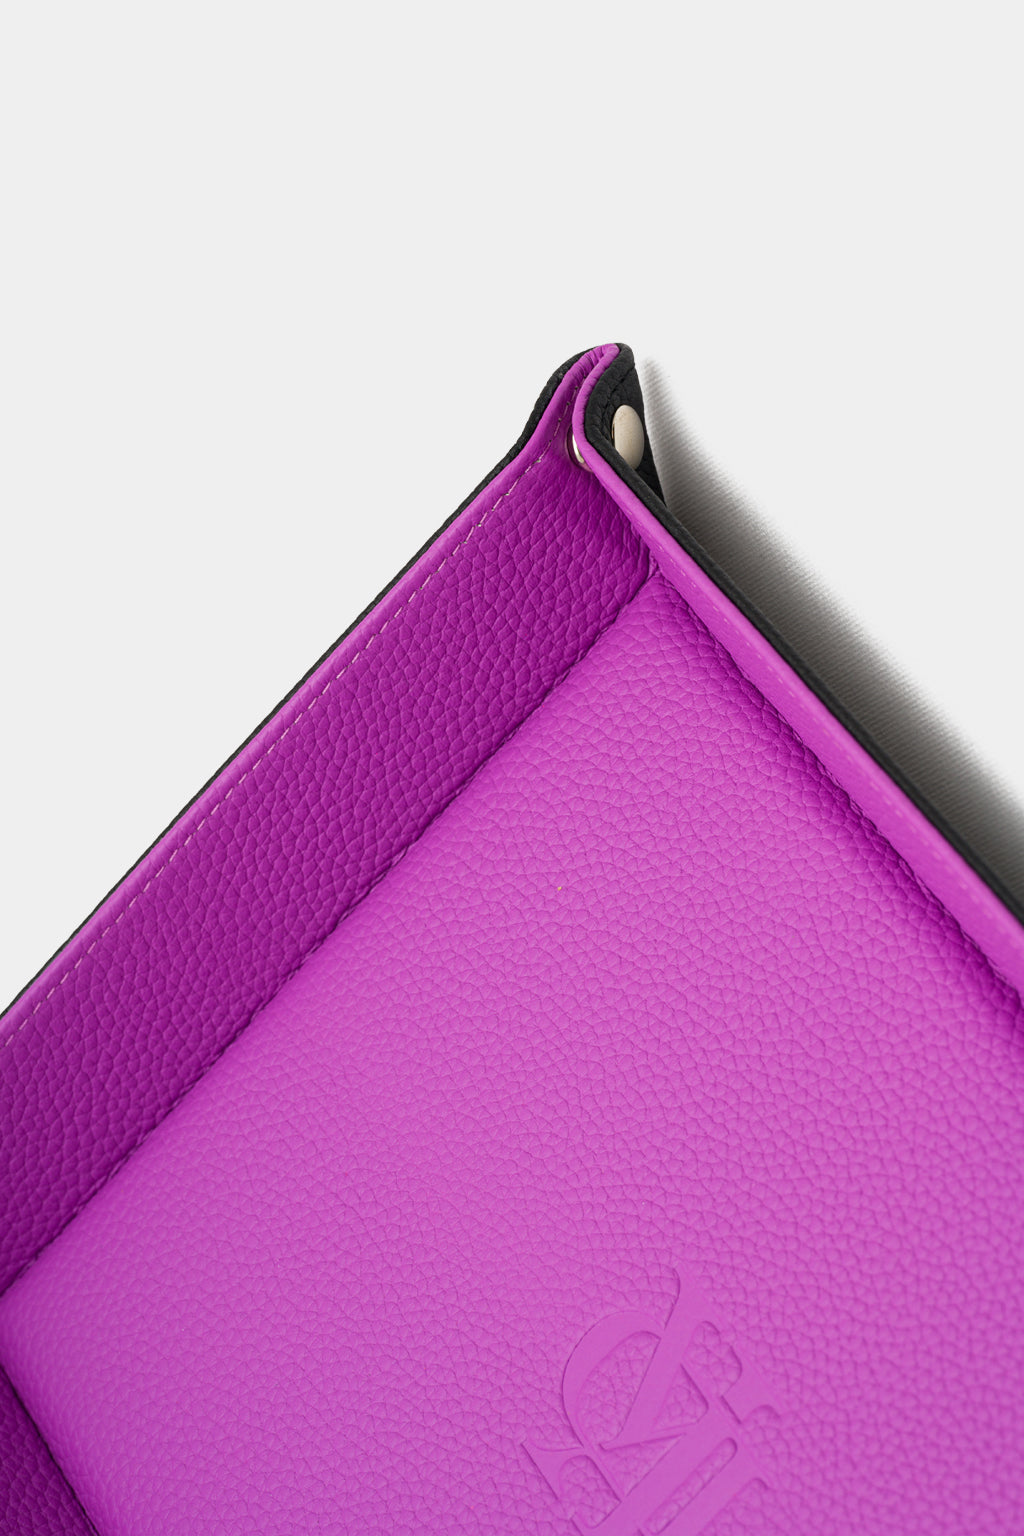 Kastro Design - Valet Tray Provence Purple